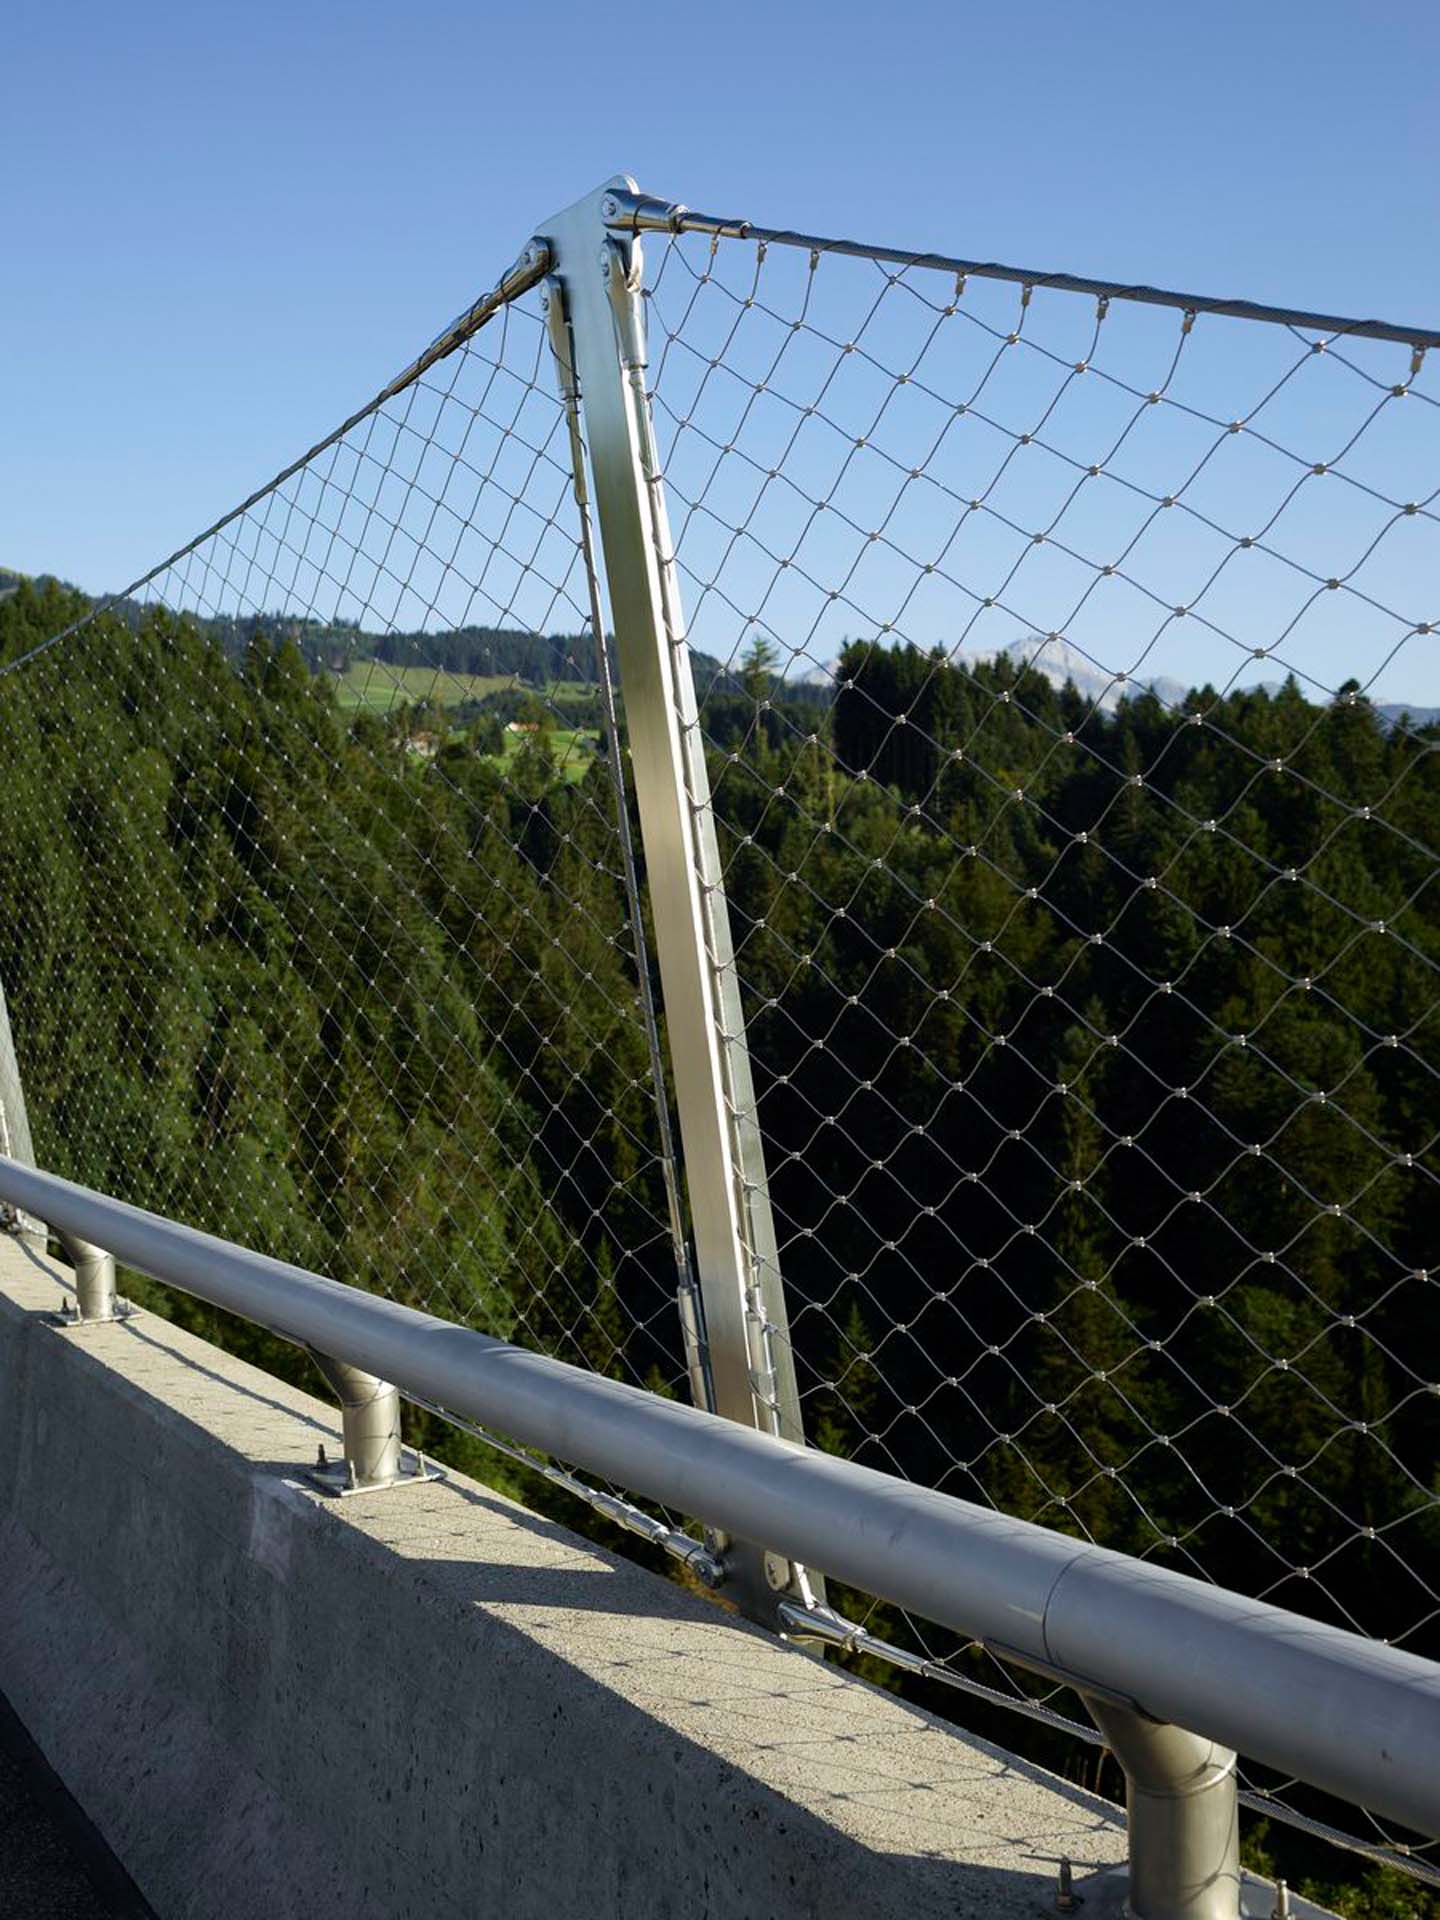 Hundwilertobel bridge safety fence